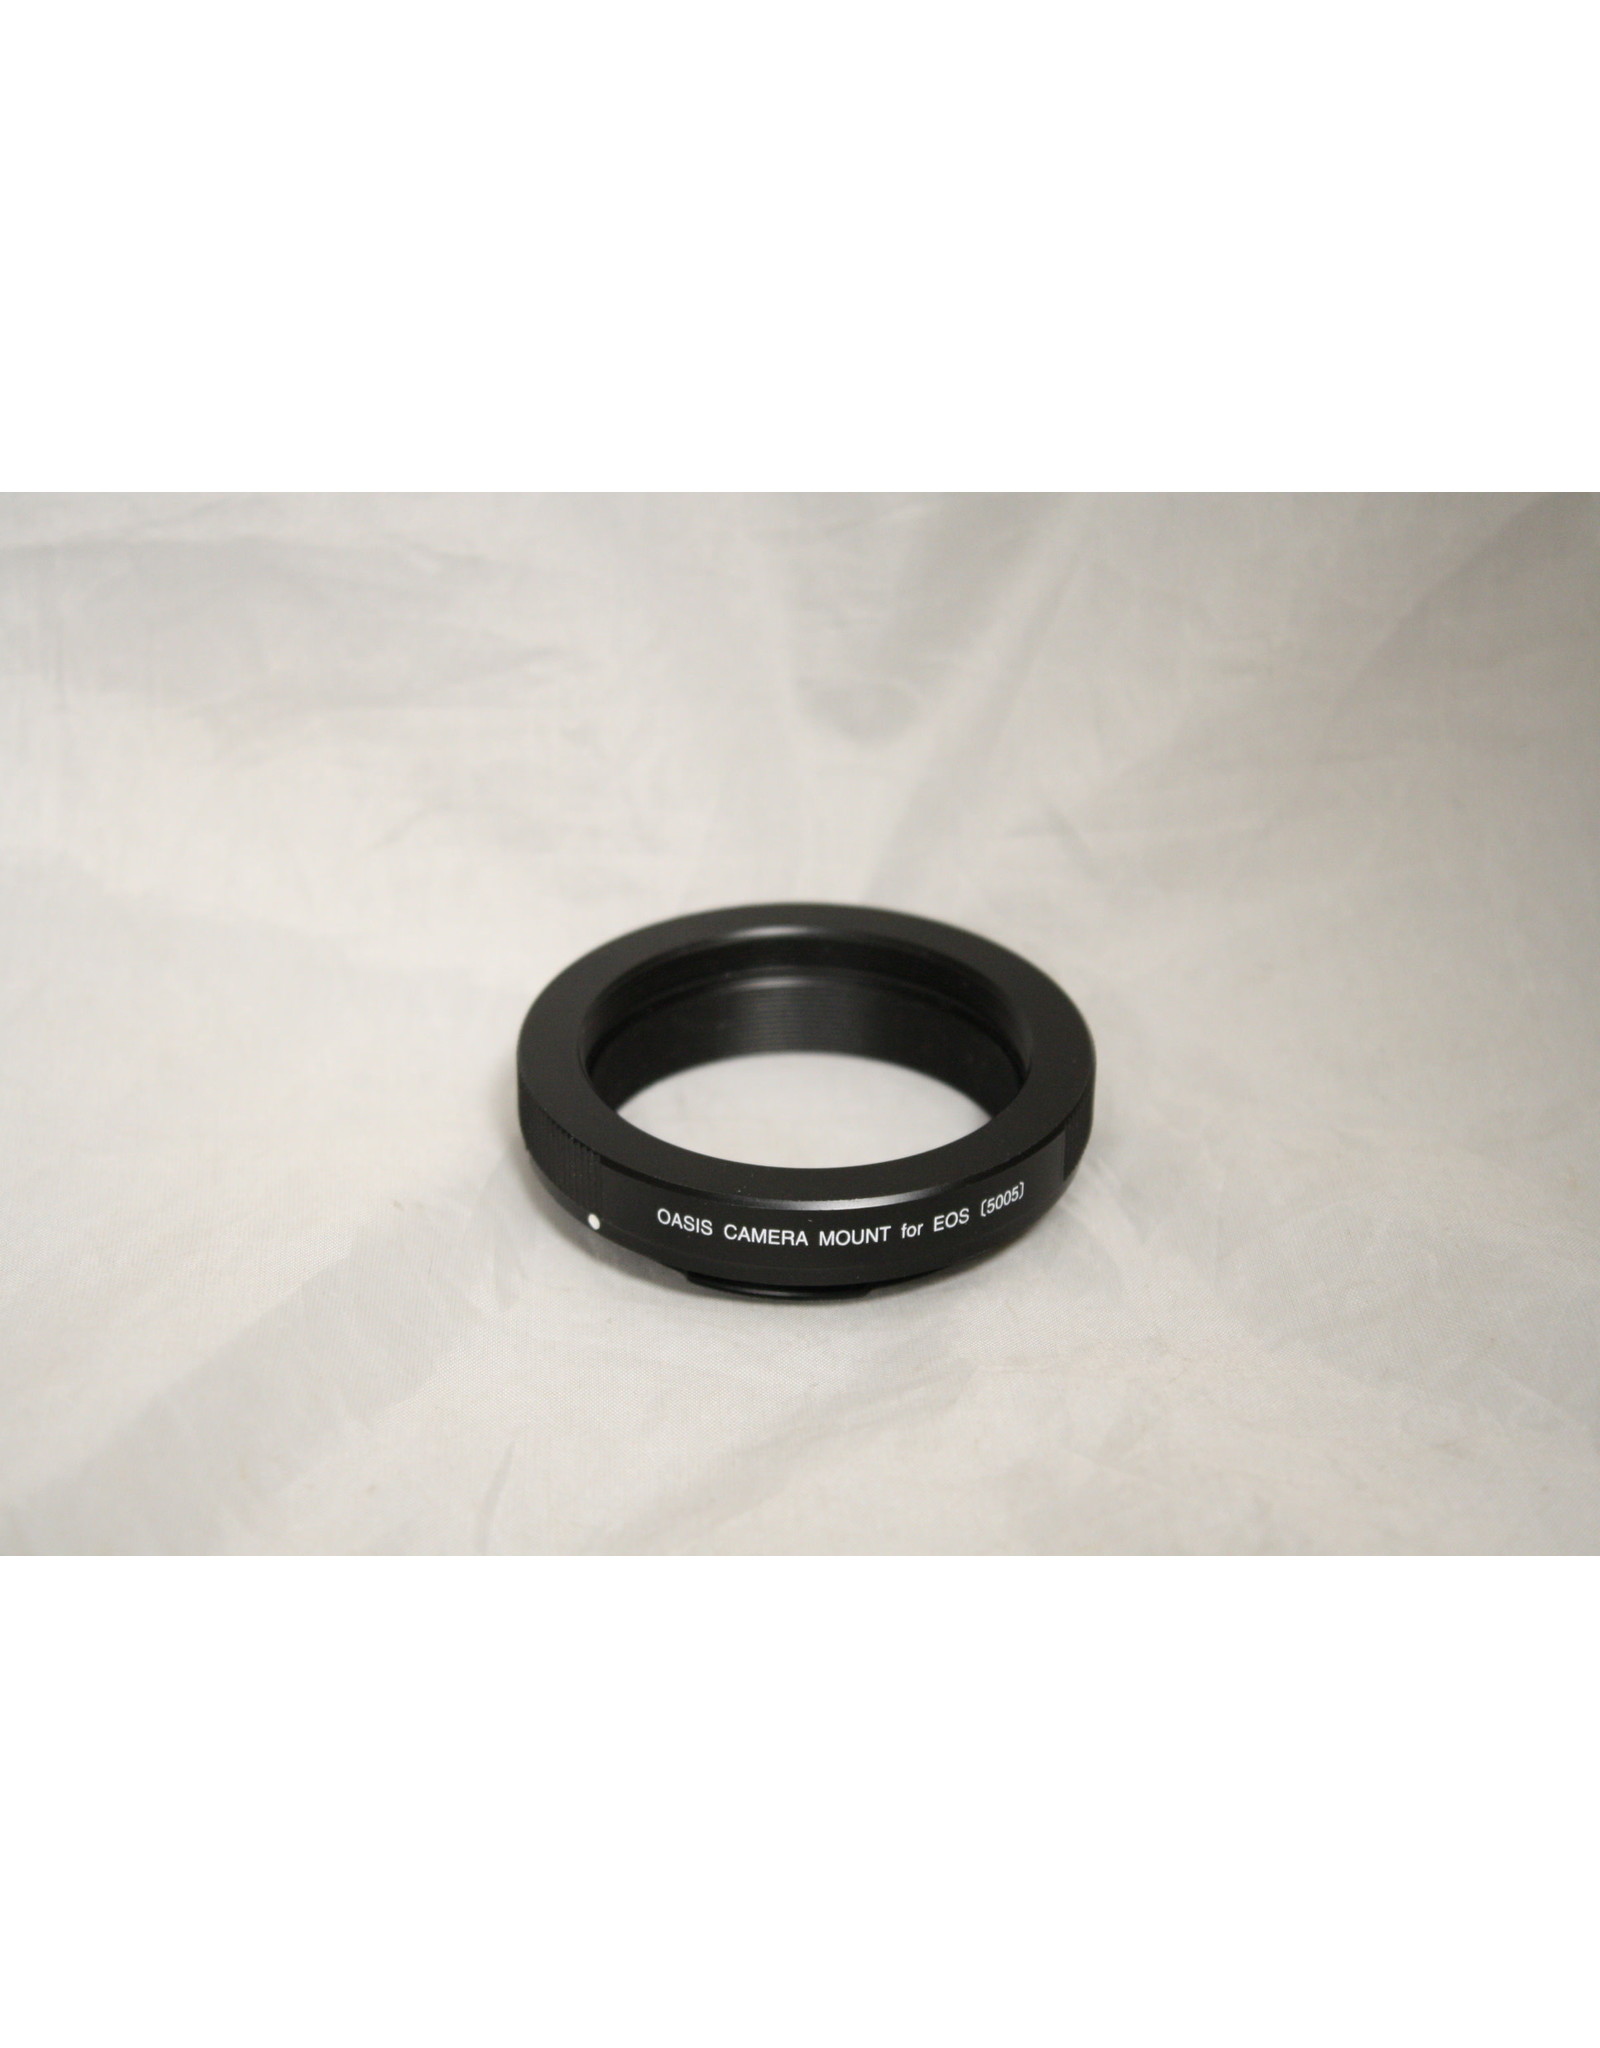 Borg Scope DSLR Camera Adapter T-ring for Canon EOS (Borg scope: 50mm thread)